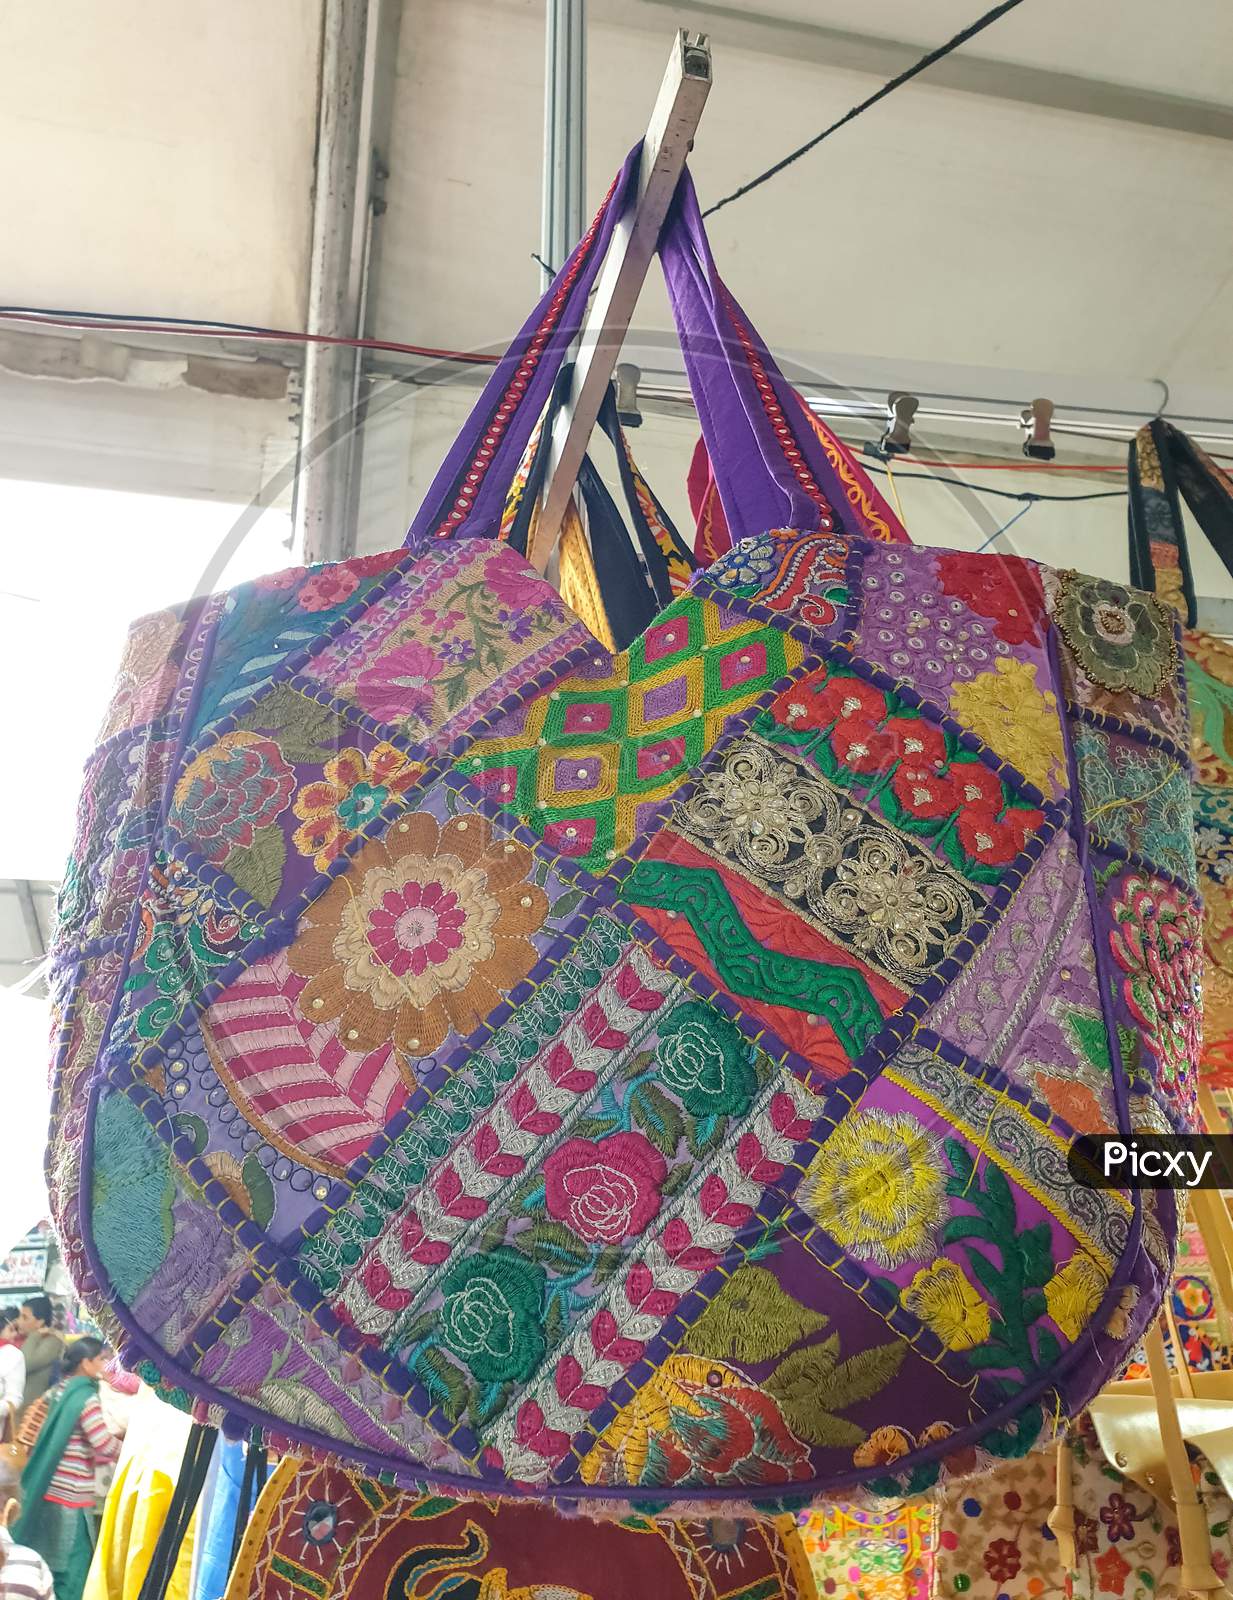 Mandi, Himachal Pradesh / India - 03 07 2020: Photo of a amazing colorful Rajasthani artwork handbag hanging in the shop for sale